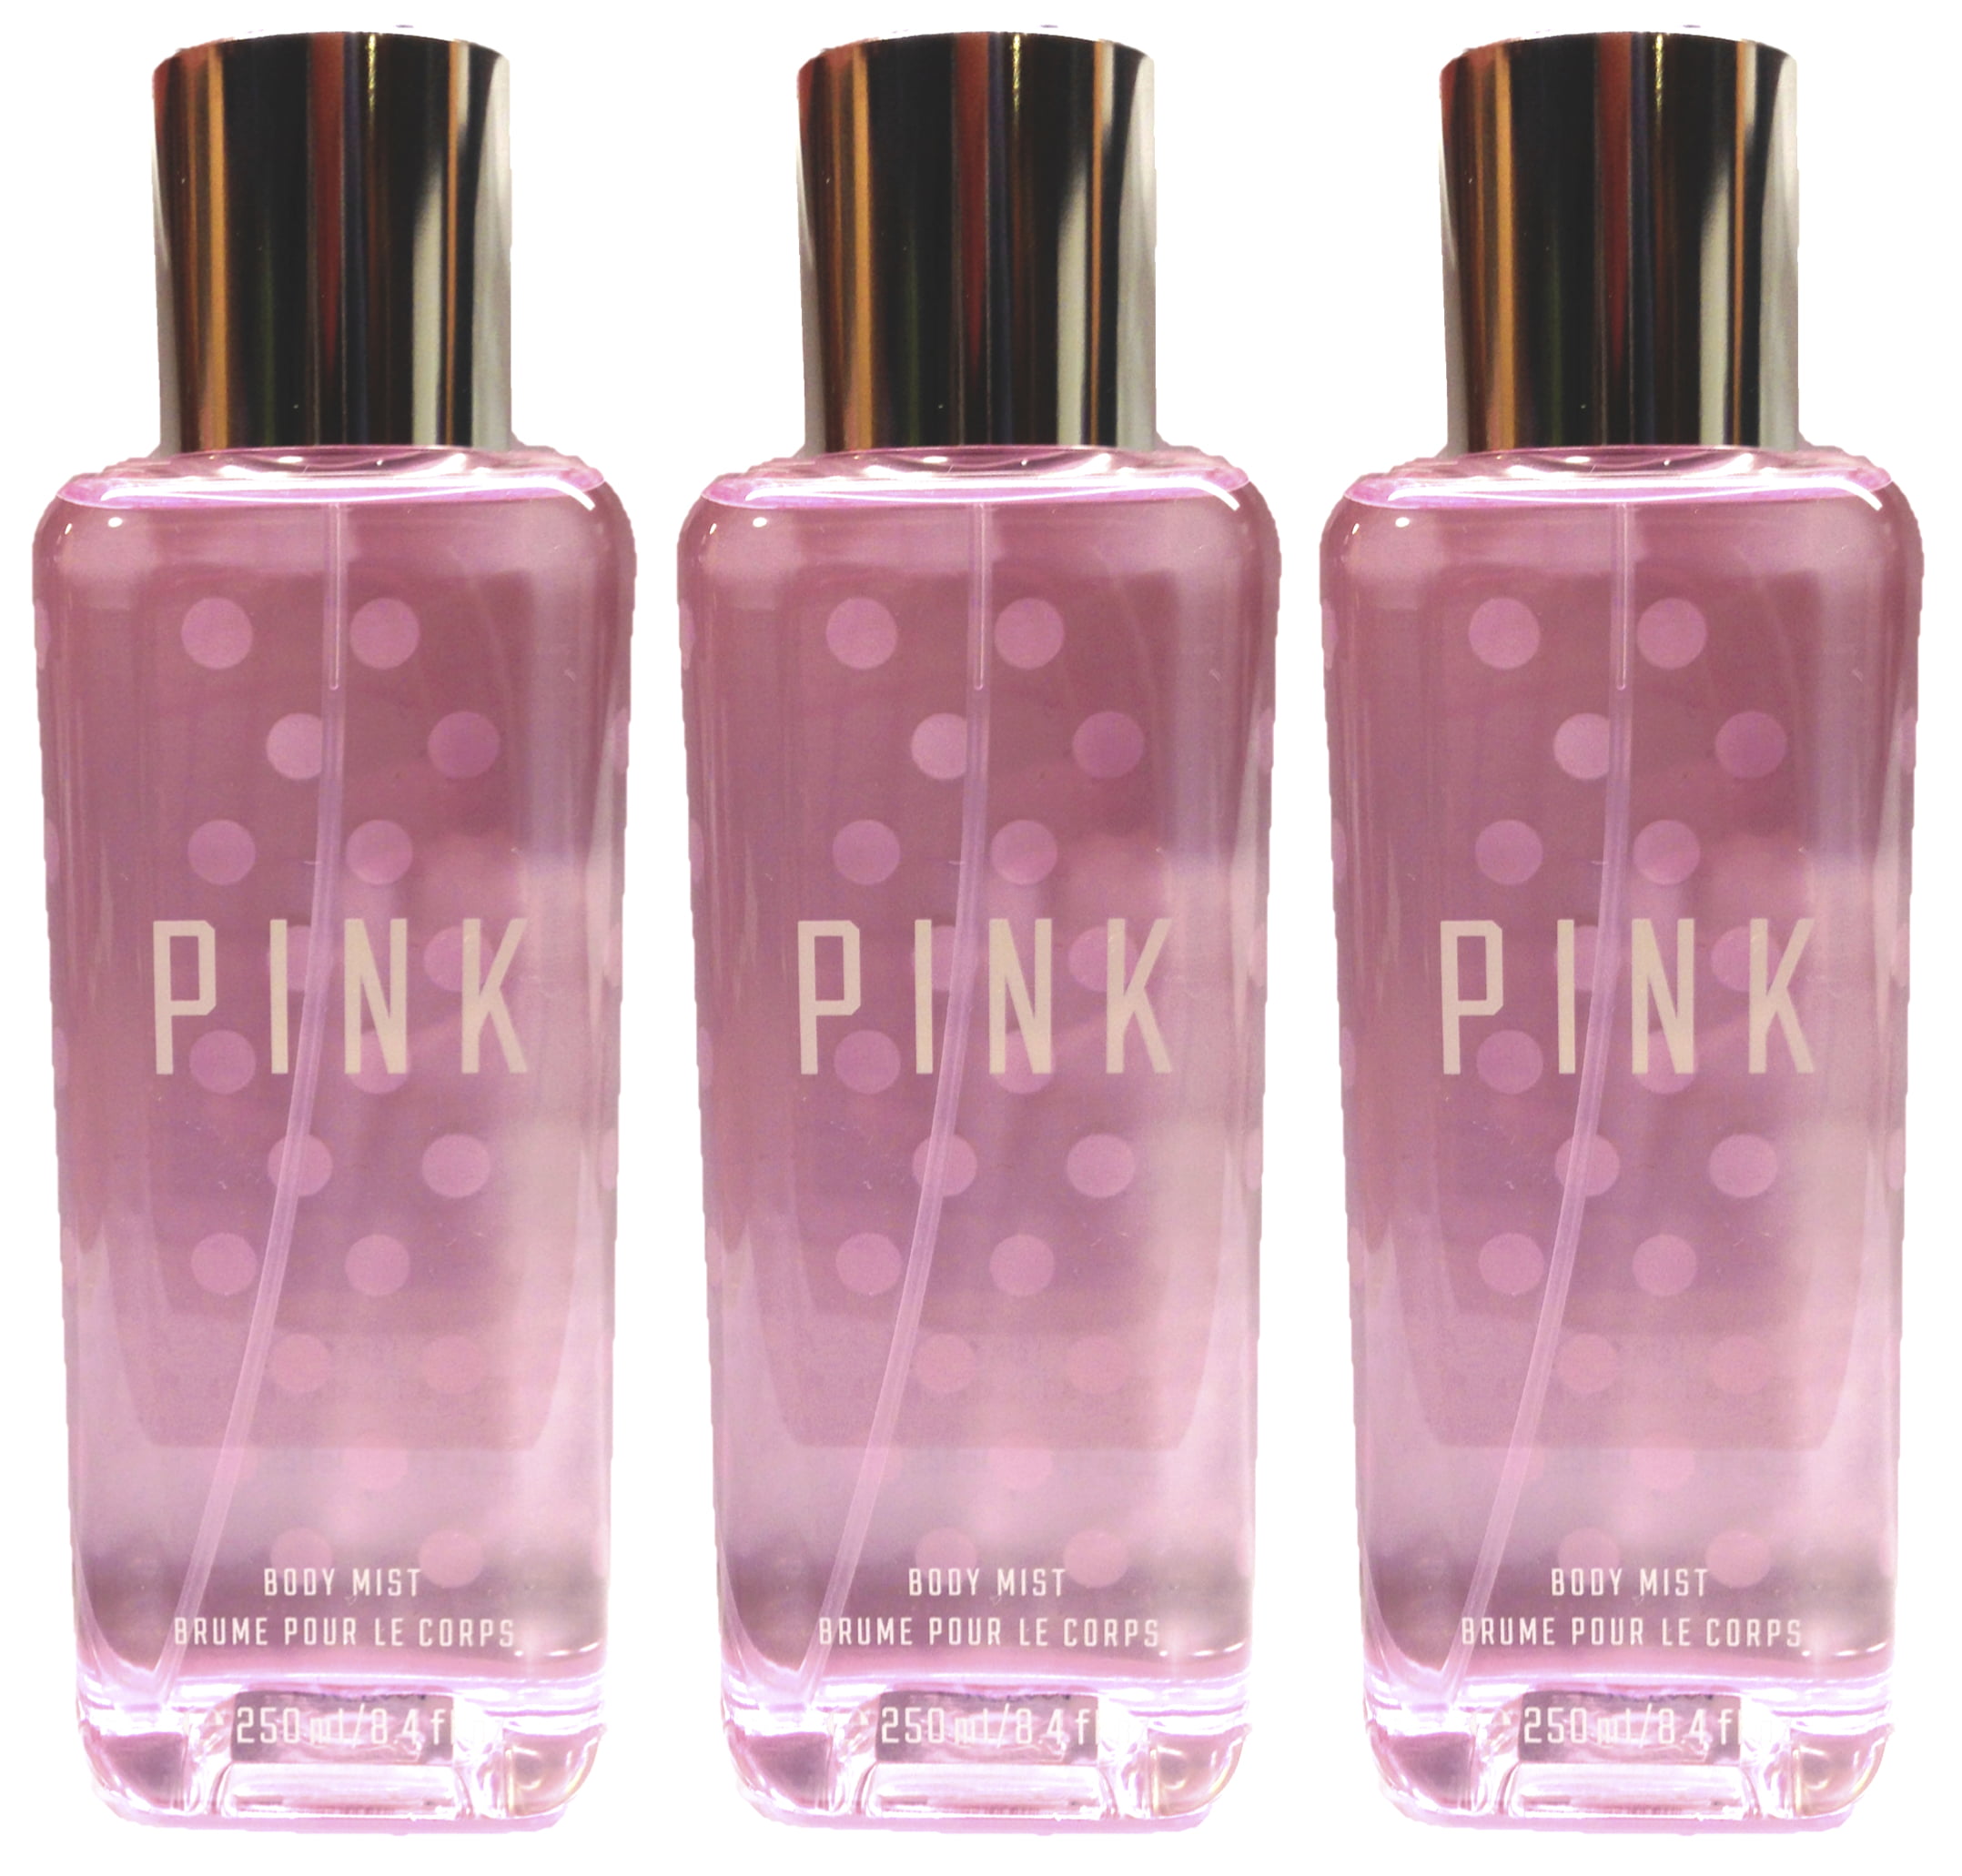 Victoria's Secret PINK Original Body Mist 8.4oz 250mL Set of 3